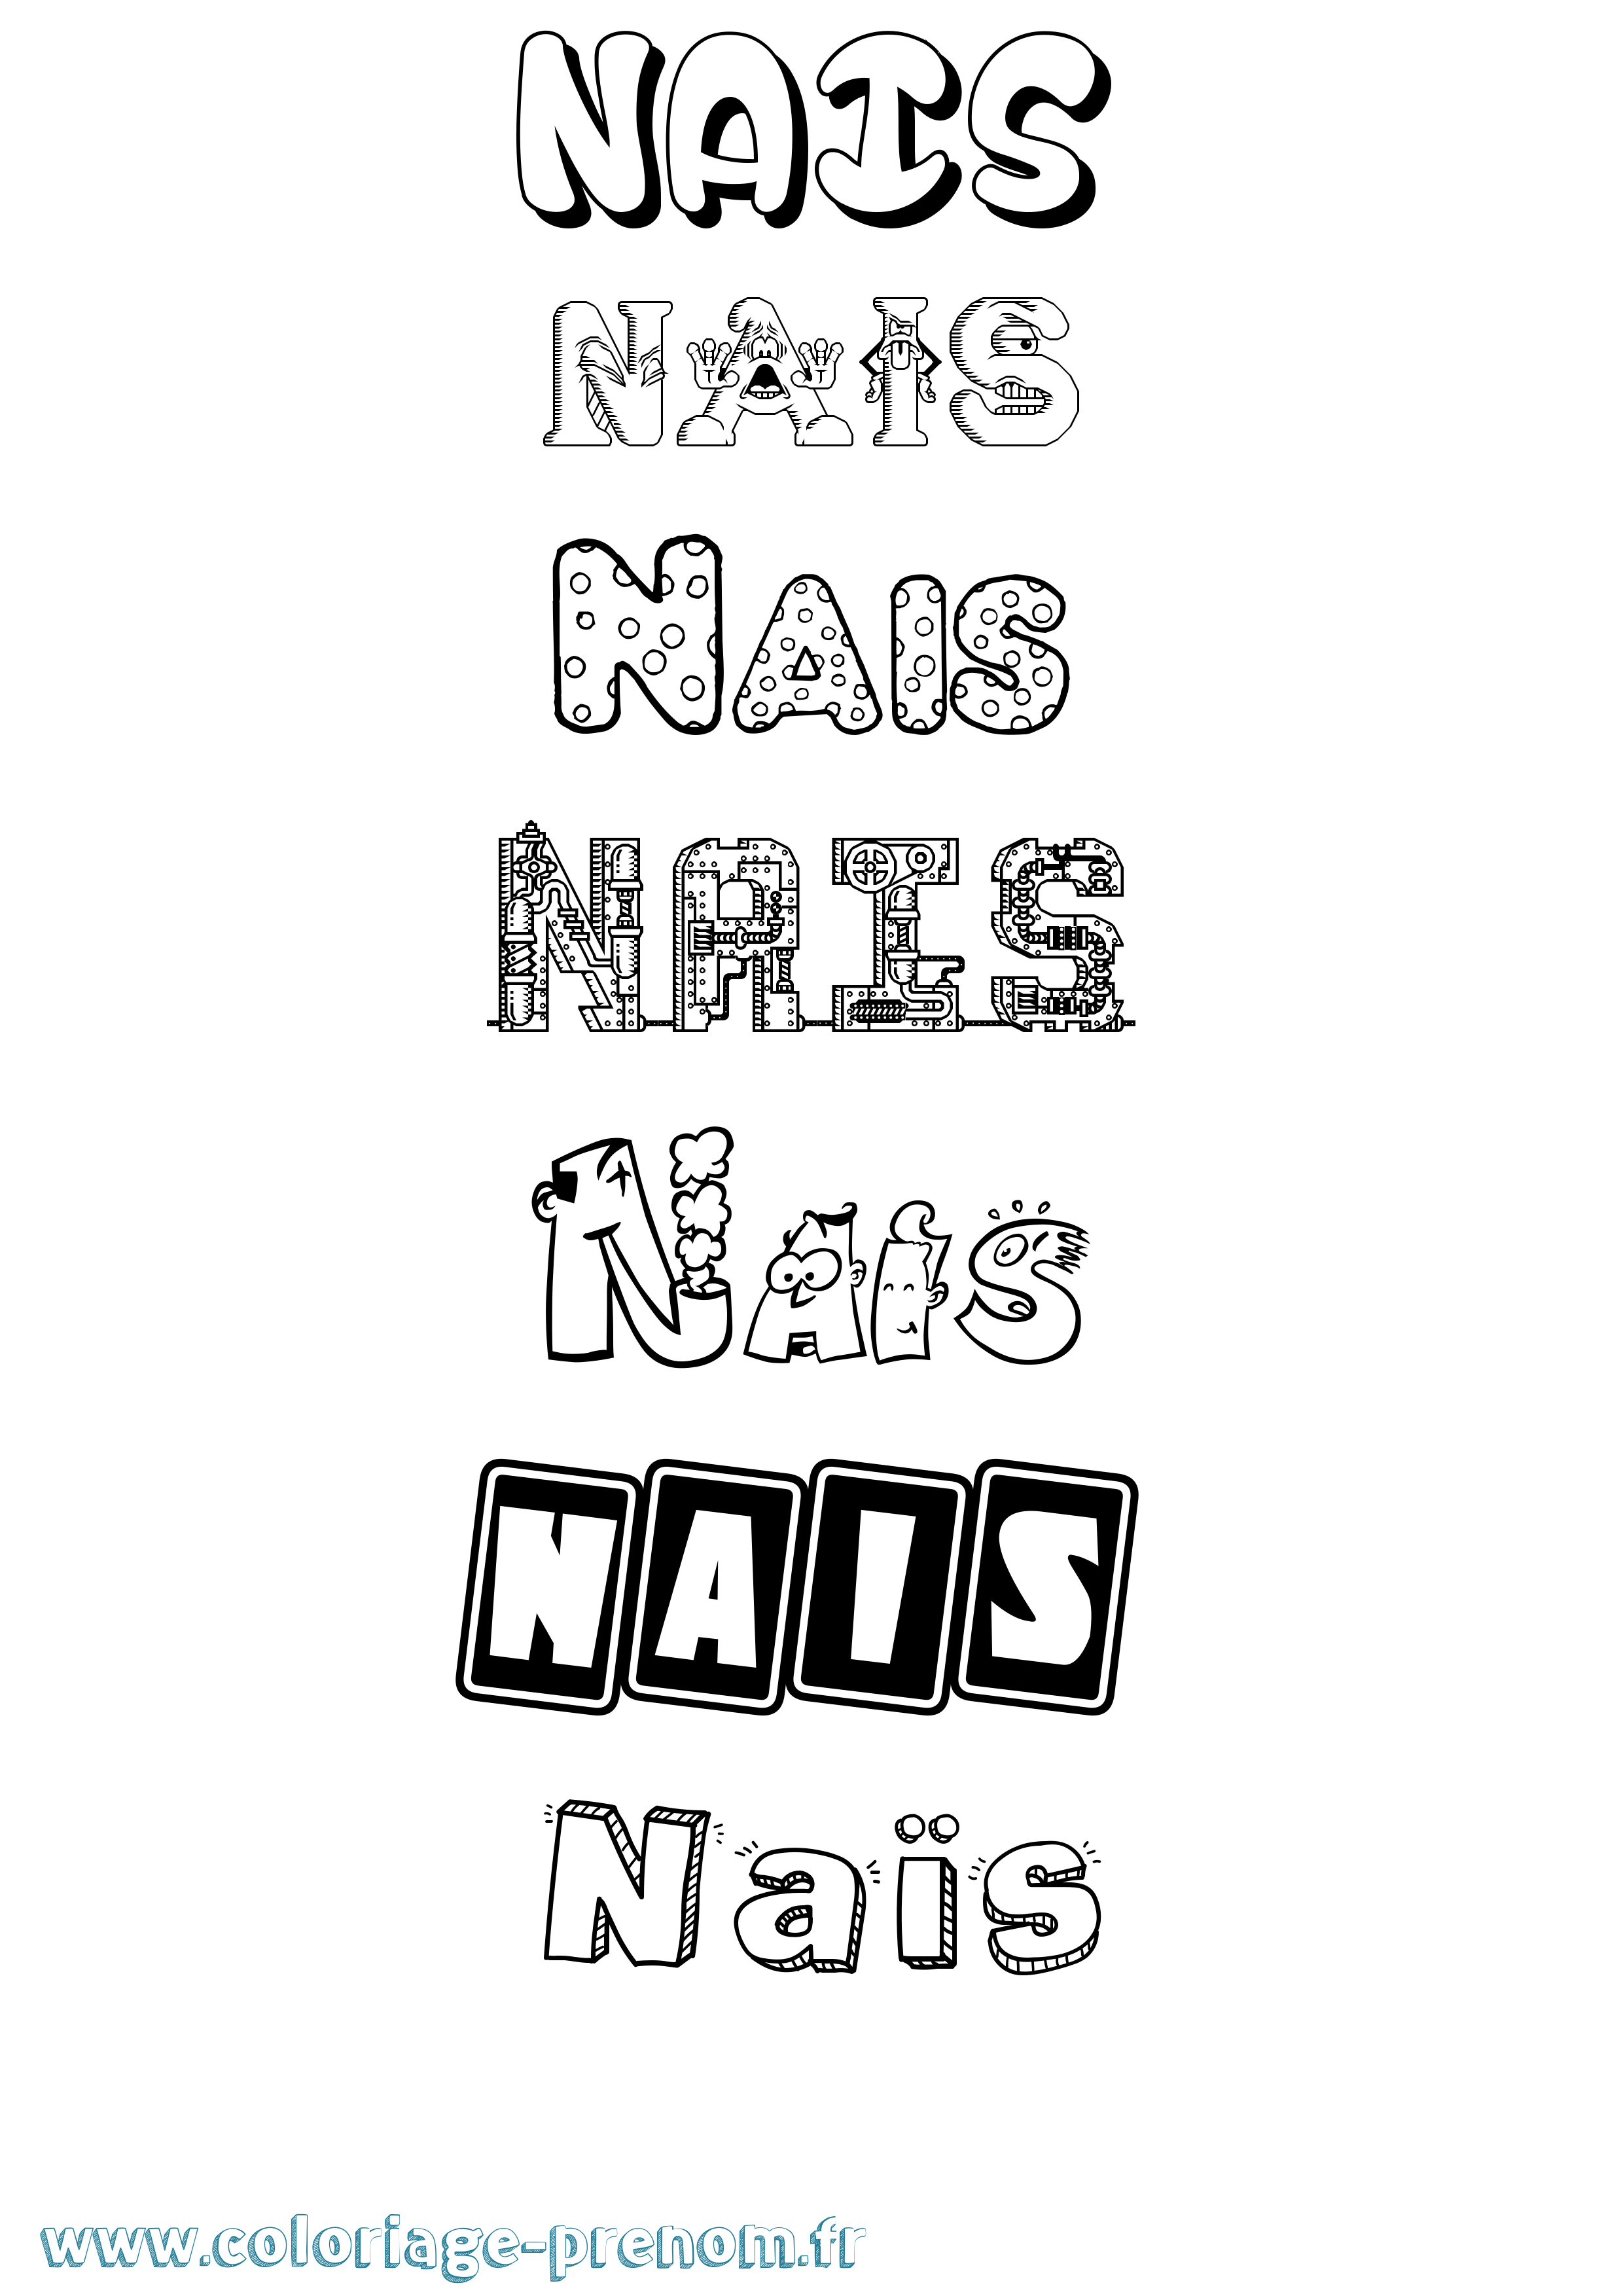 Coloriage prénom Naïs